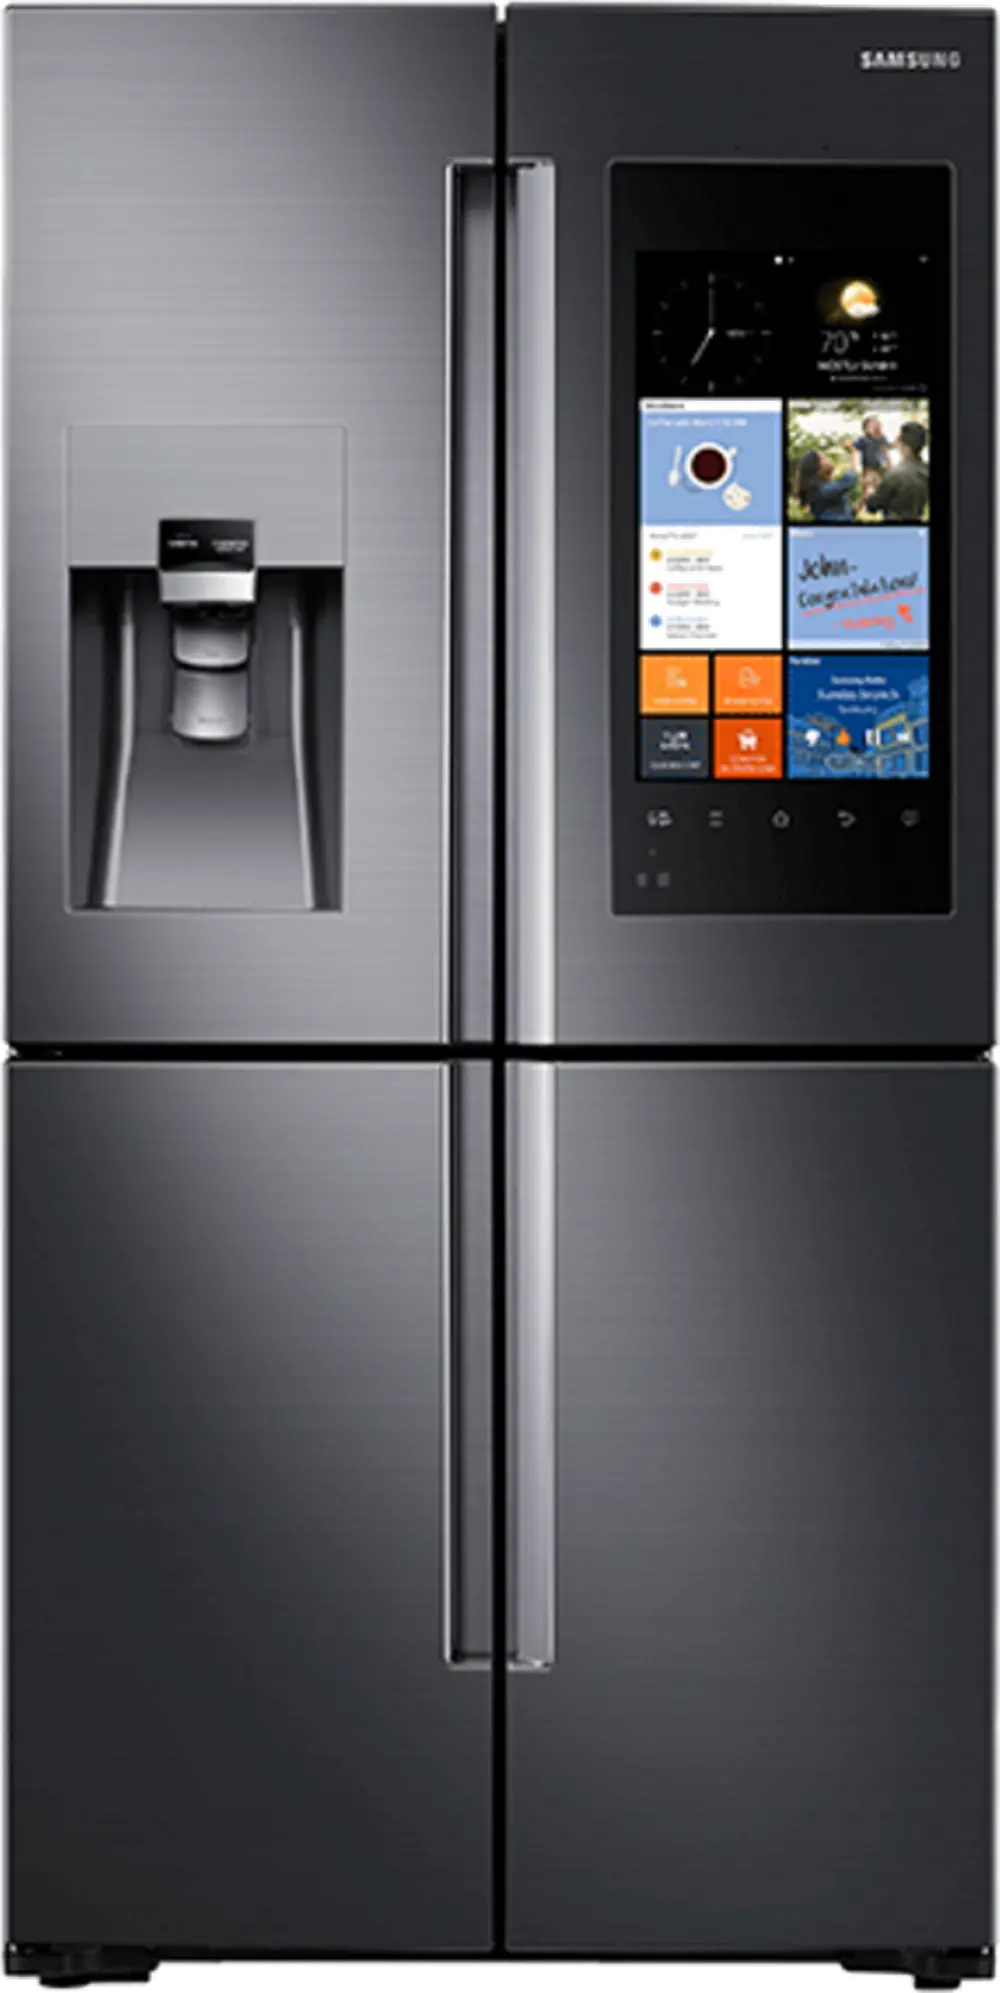 RF22K9581SG Samsung Family Hub Refrigerator - 36 Inch Counter Depth - Black Stainless Steel-1